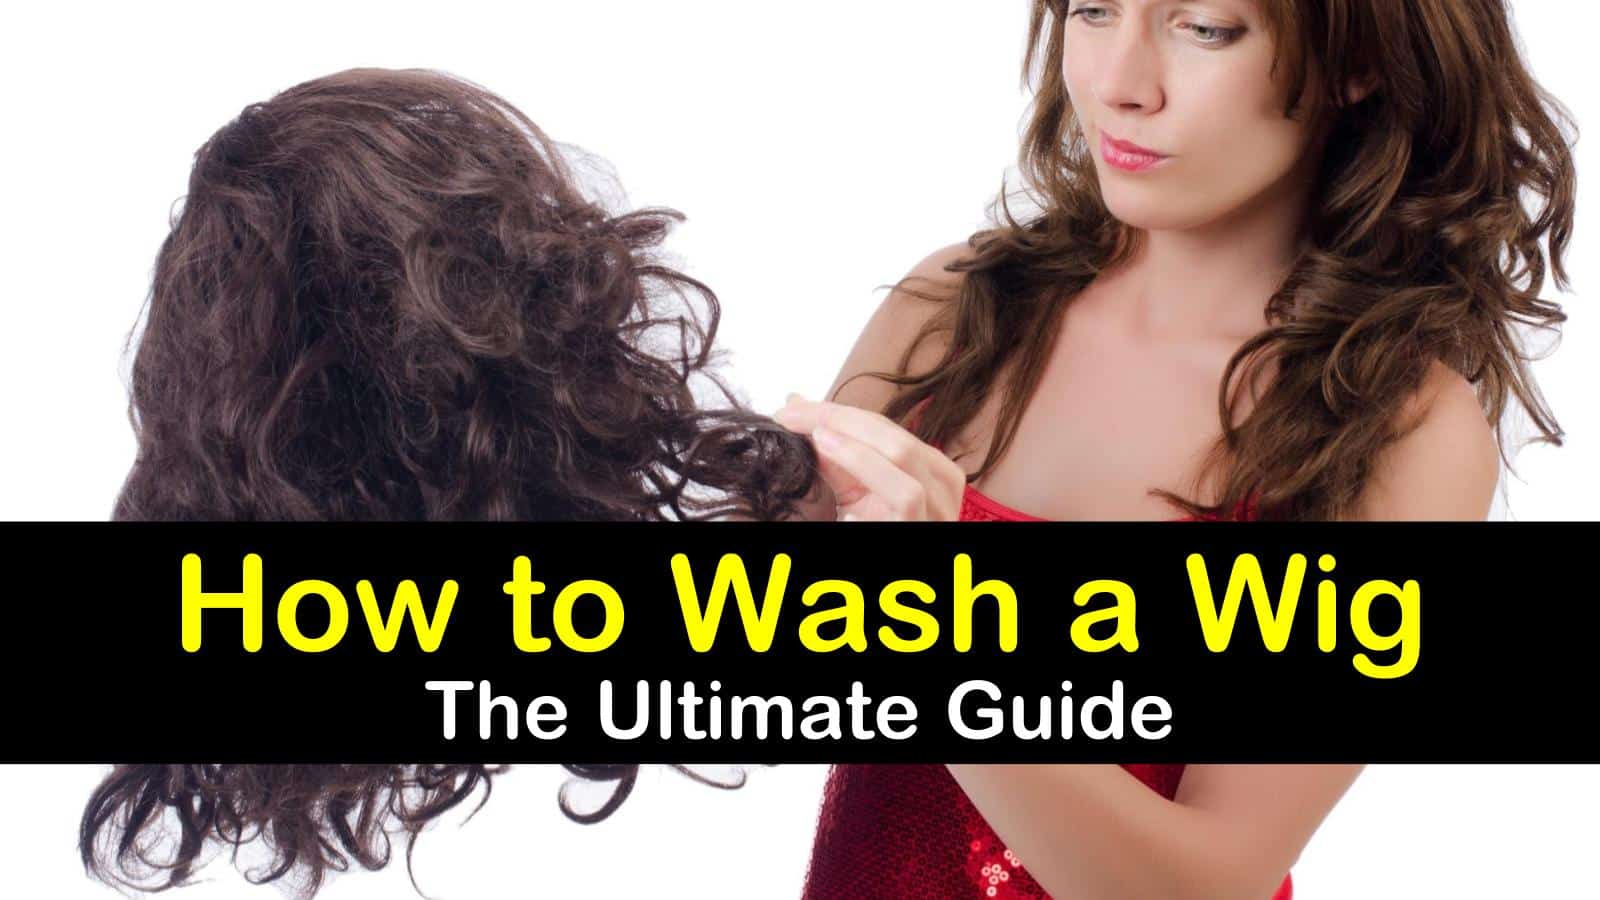 5 Simple Ways to Wash a Wig